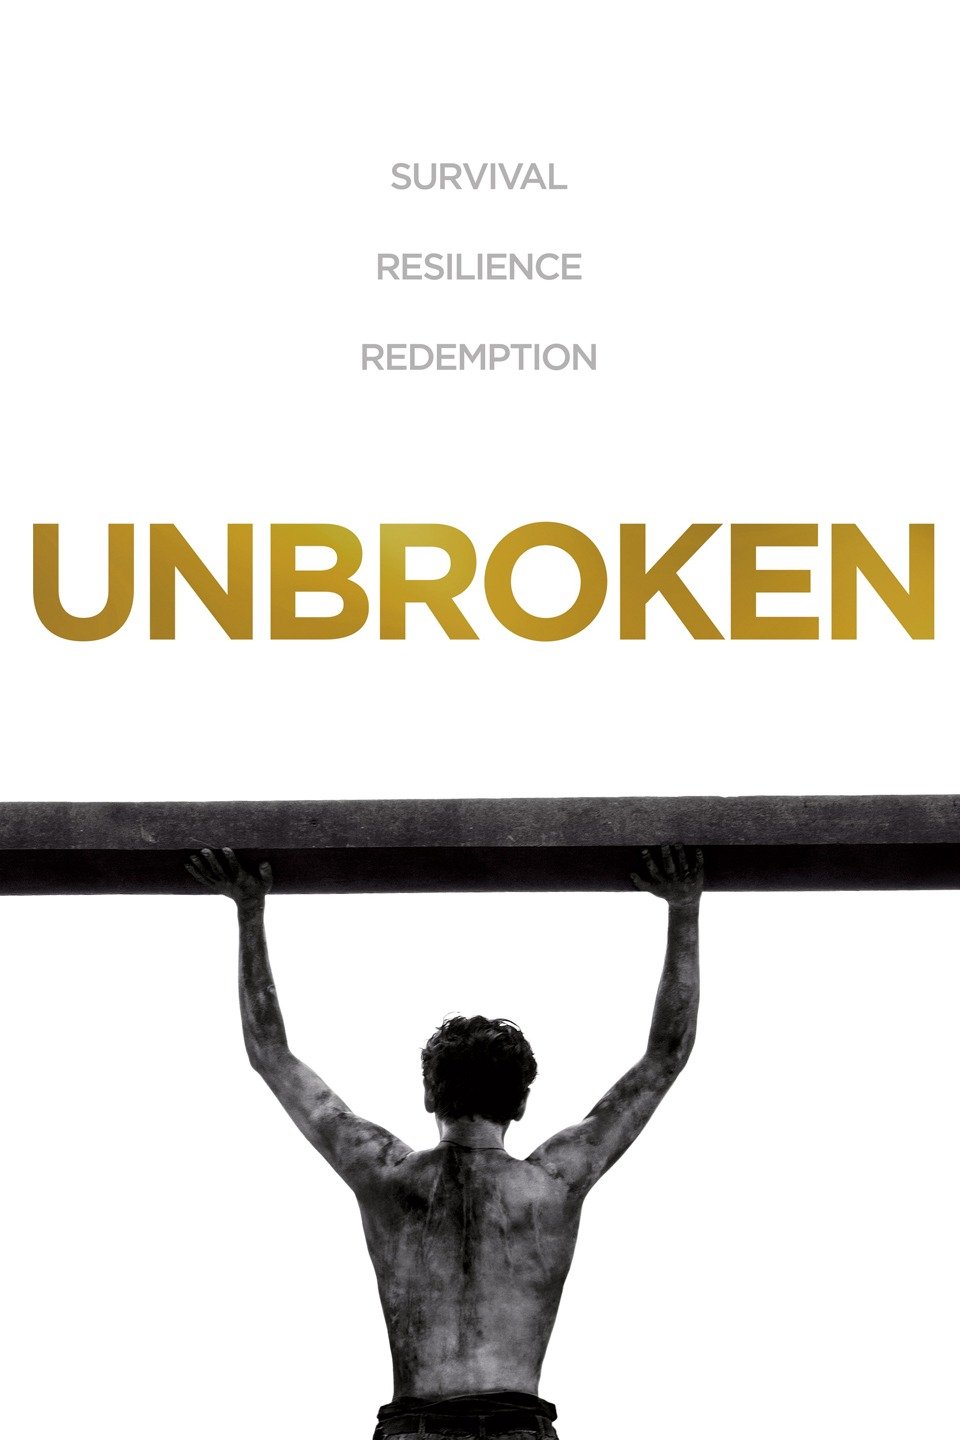 [MINI Super-HQ] Unbroken (2014) คนแกร่งหัวใจไม่ยอมแพ้ [1080p] [พากย์ไทย 5.1 + เสียงอังกฤษ DTS] [บรรยายไทย + อังกฤษ] [เสียงไทย + ซับไทย] [OPENLOAD]